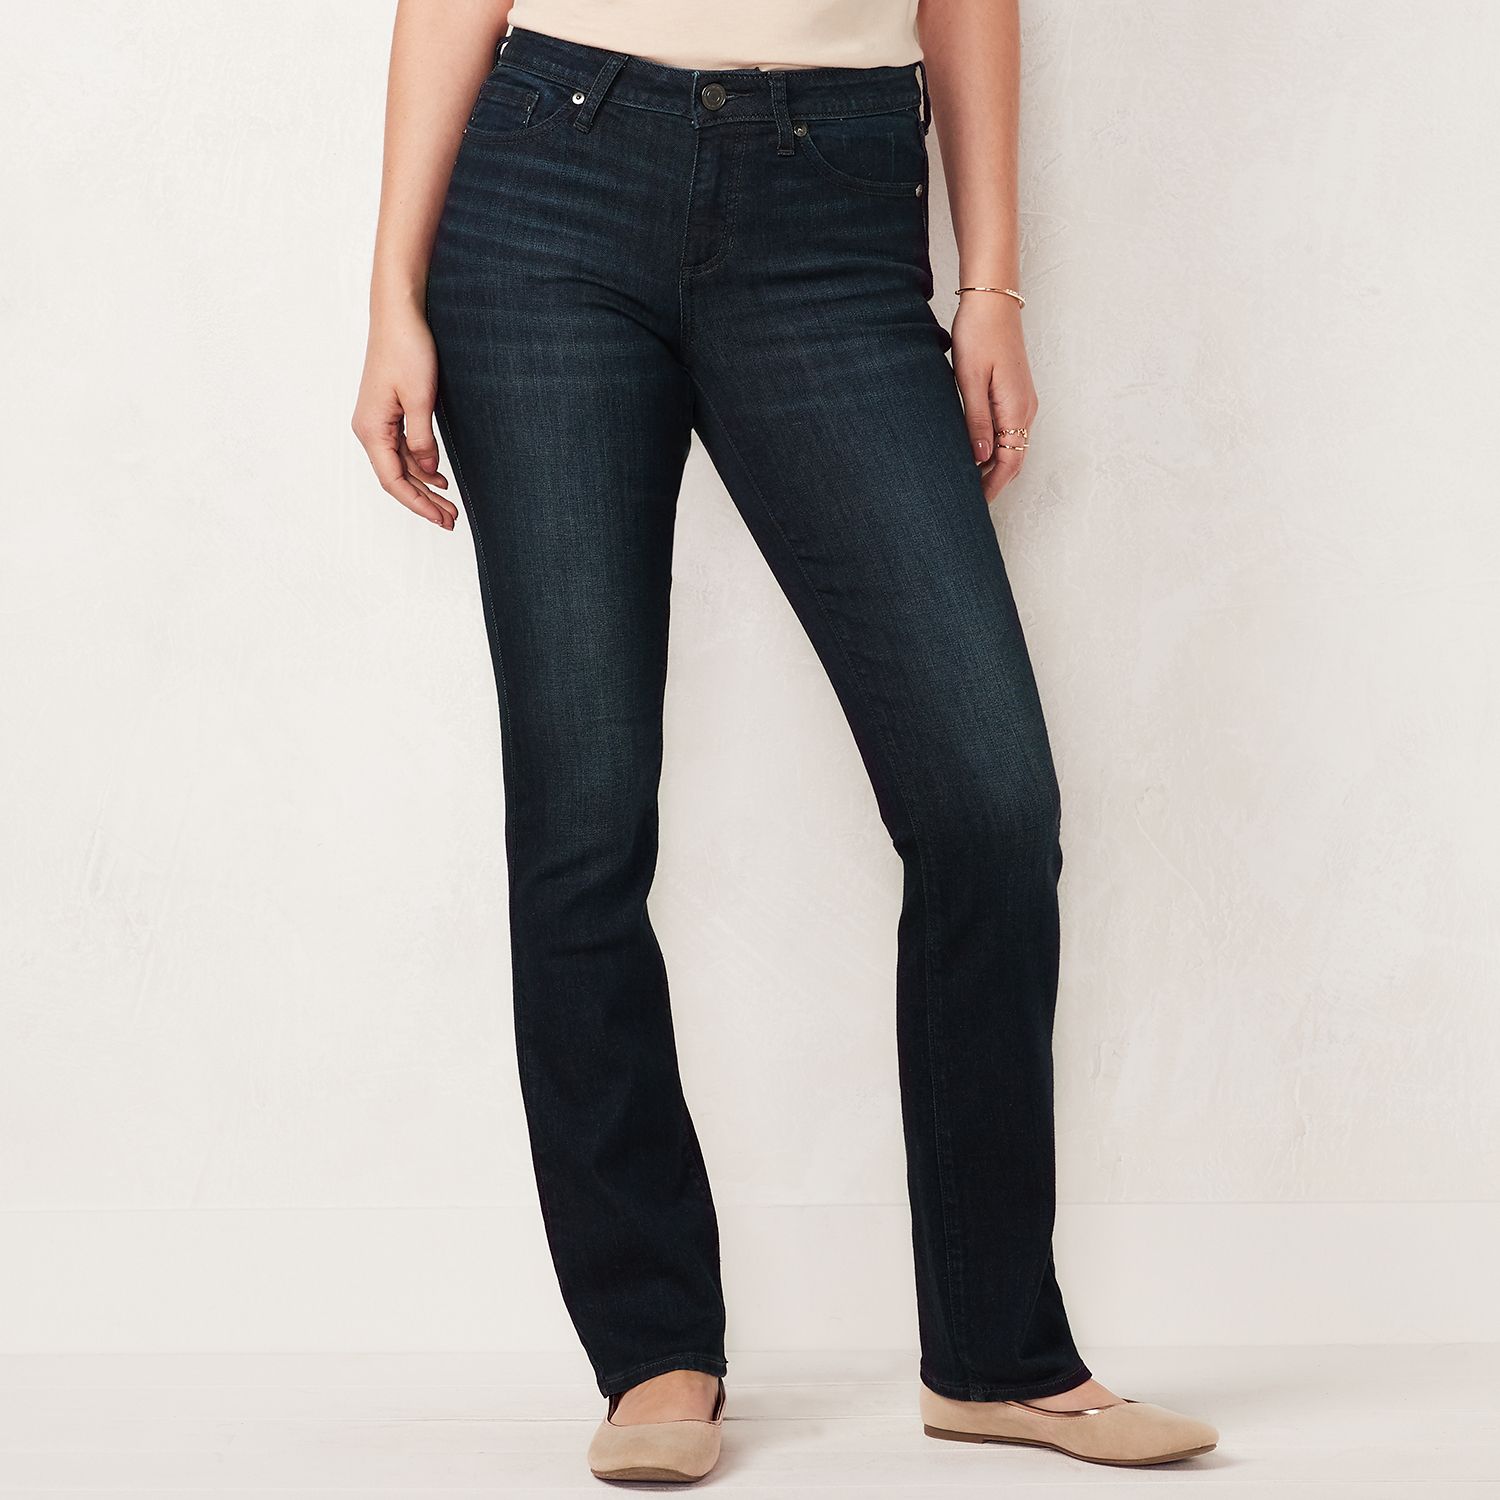 lauren conrad bootcut jeans